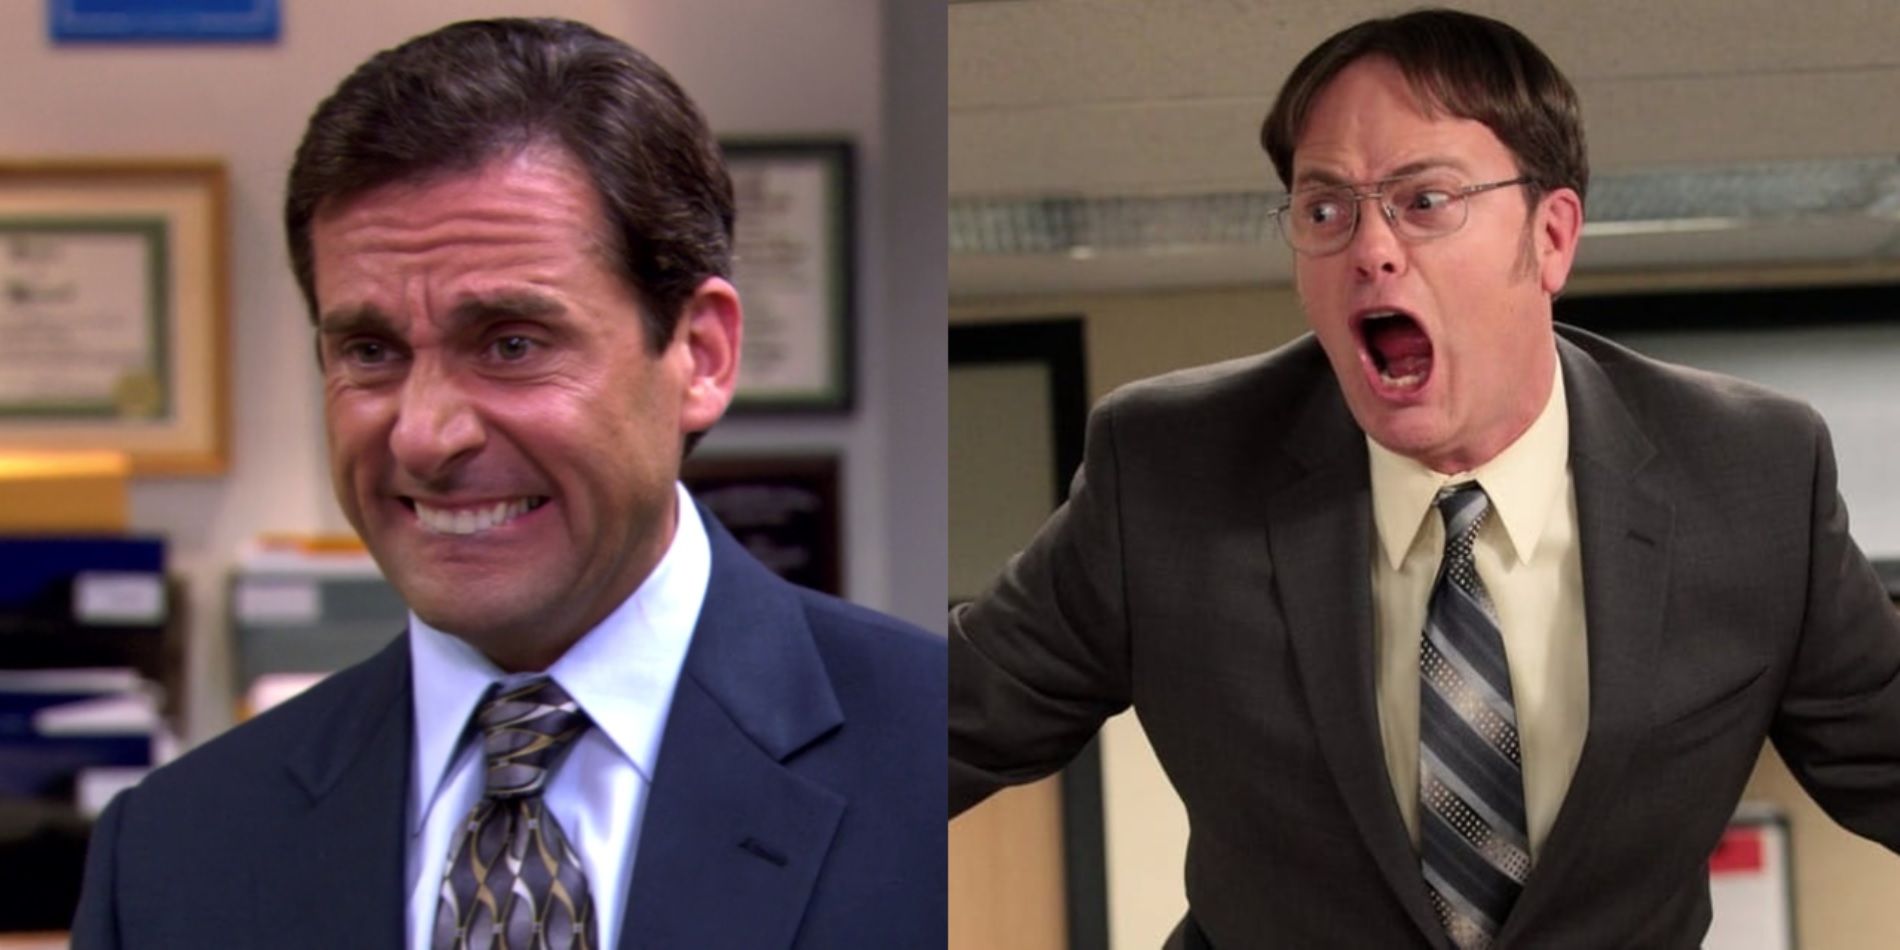 Split image of Steve Carell as Michael Scott and Rainn Wilson as Dwight Schrute in The Office